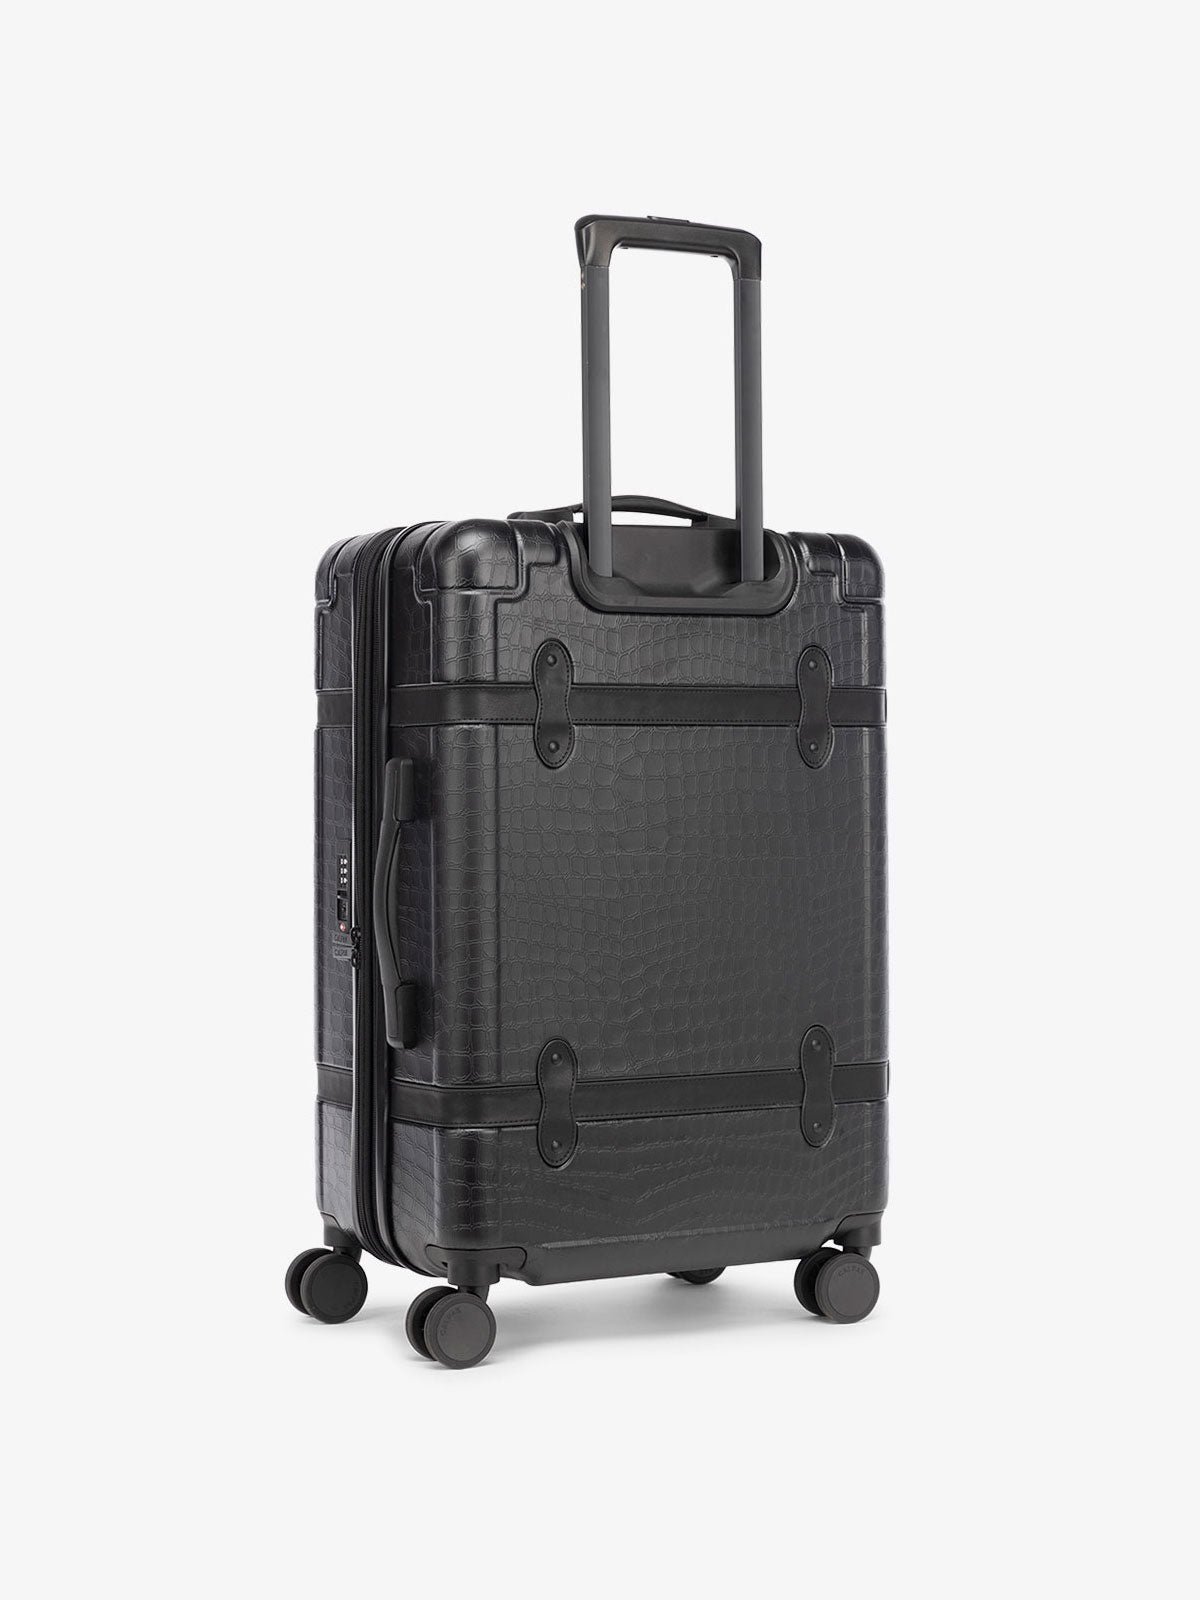 CALPAK TRNK 25 inch black medium luggage with TSA approved locks